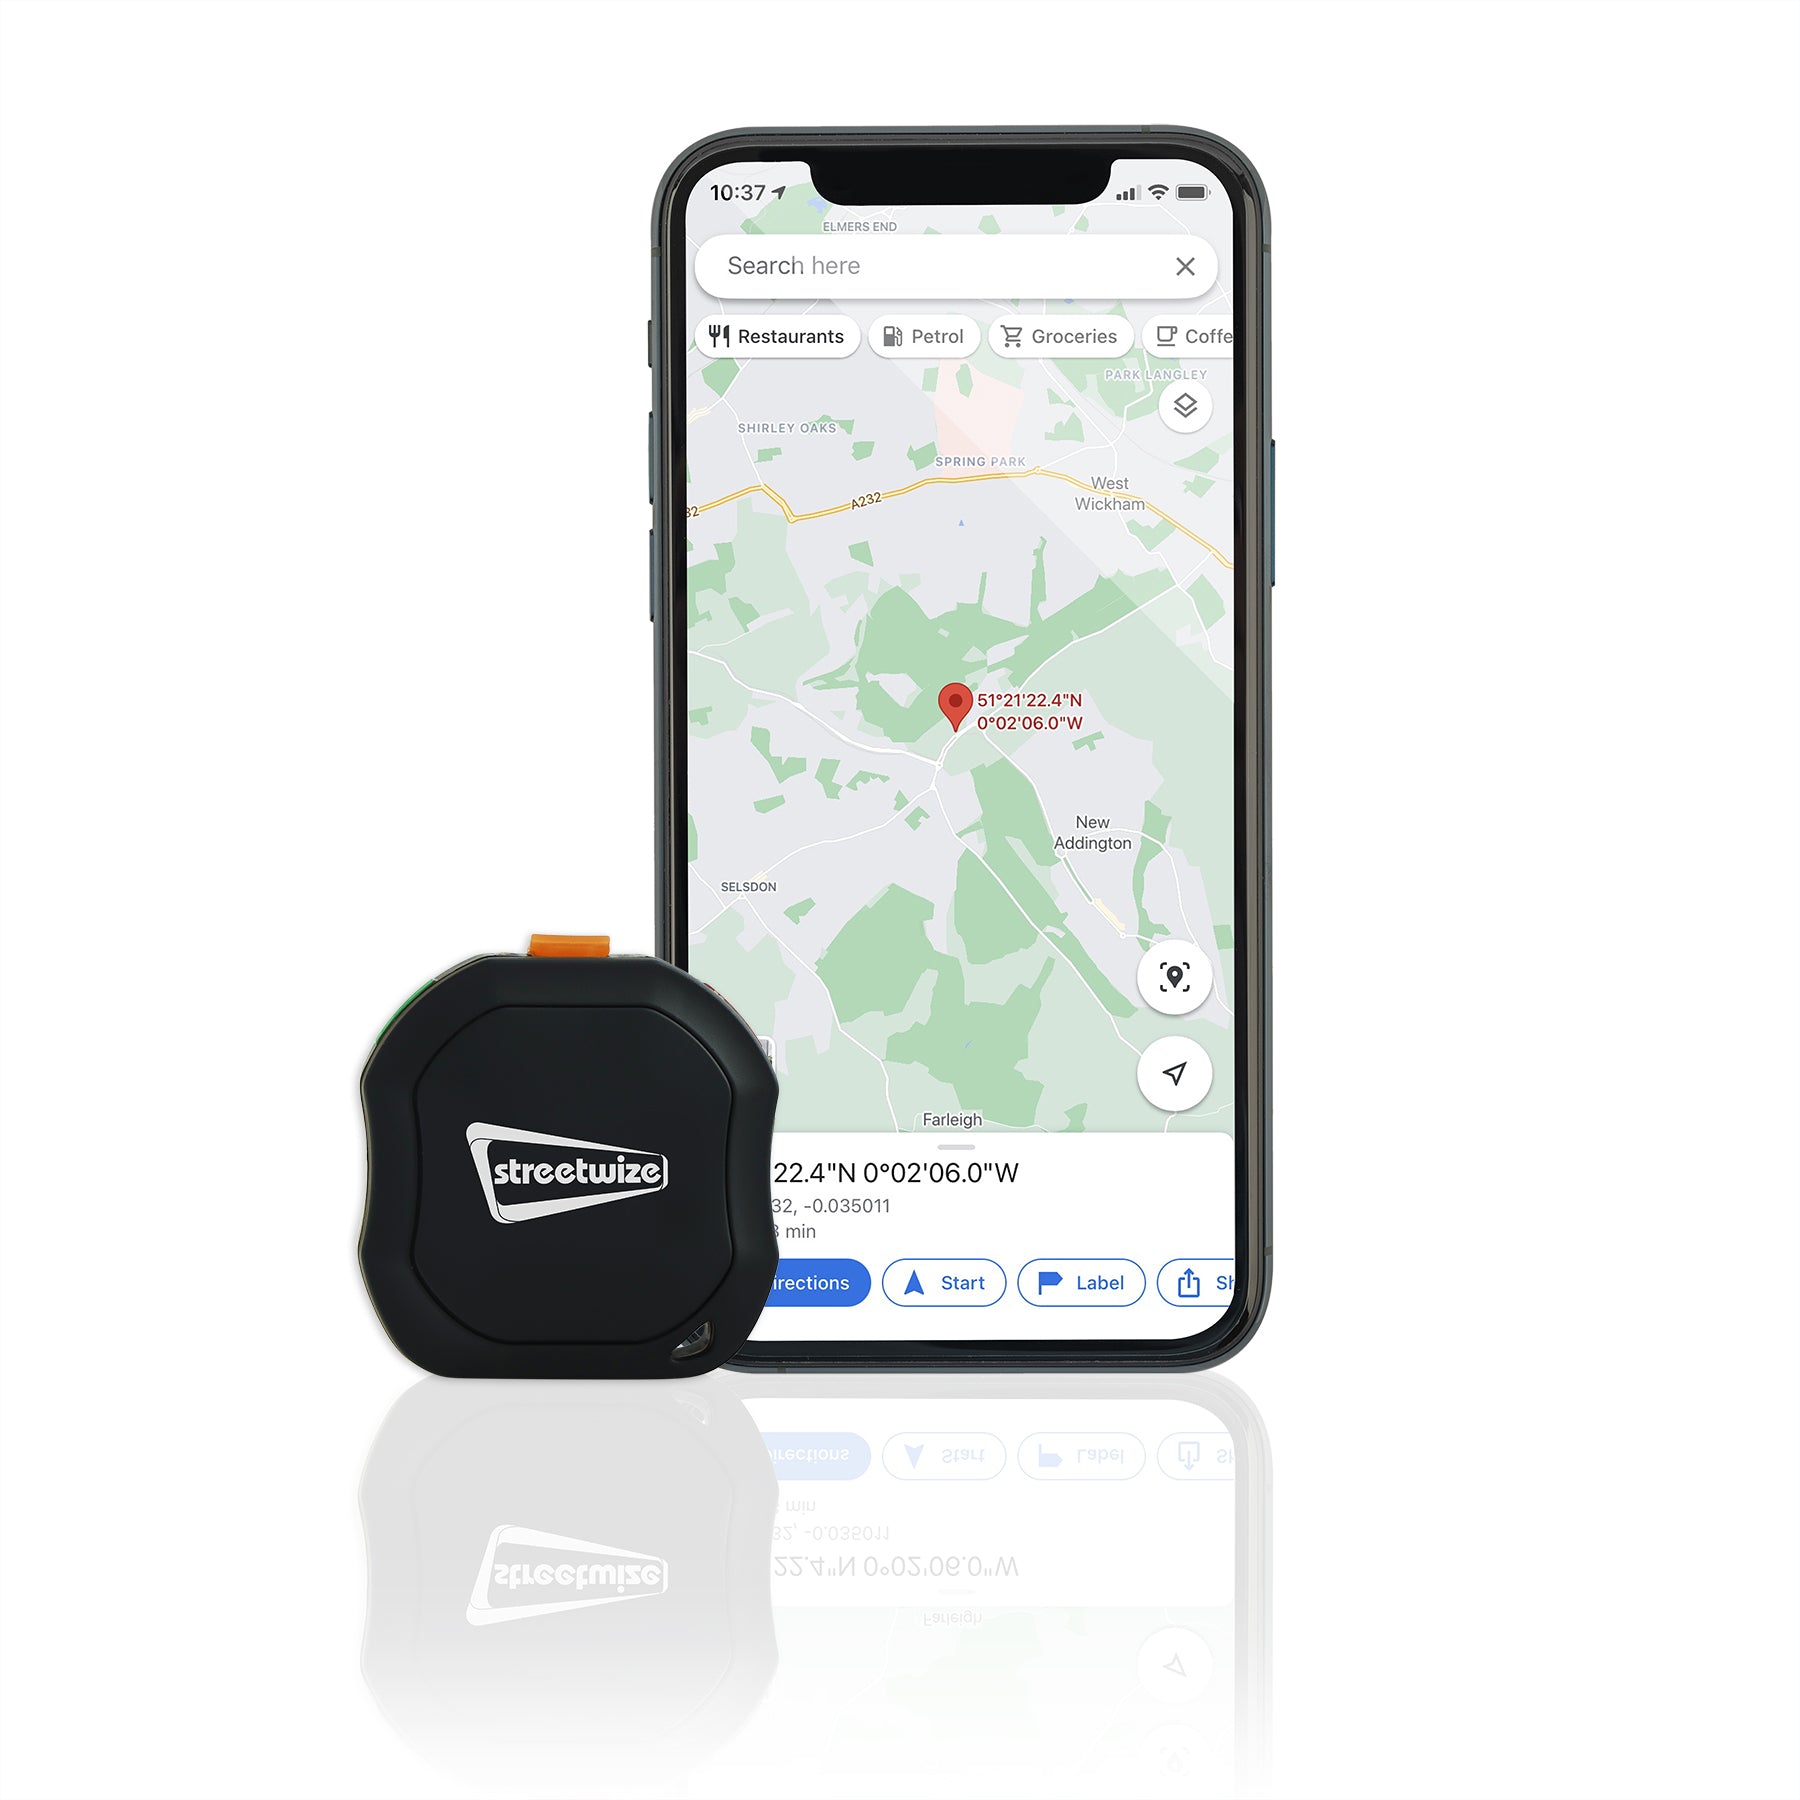 Streetwize GPS Tracker